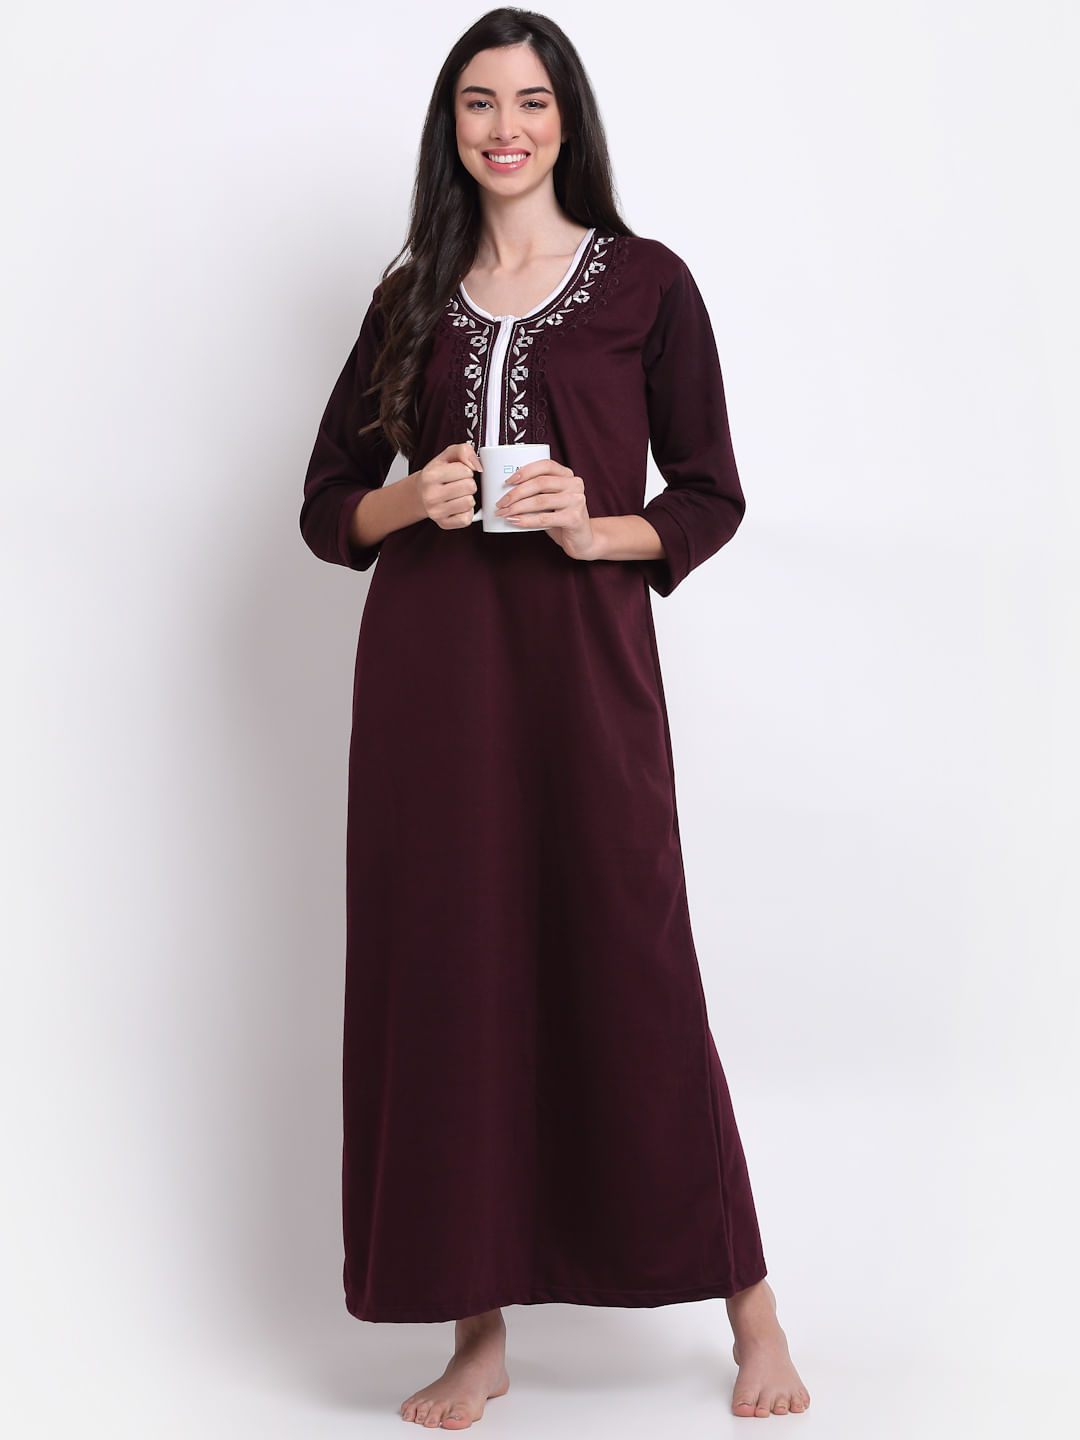 Source Fancy Winter Velvet Robe Fleece Women Night Gowns on m.alibaba.com